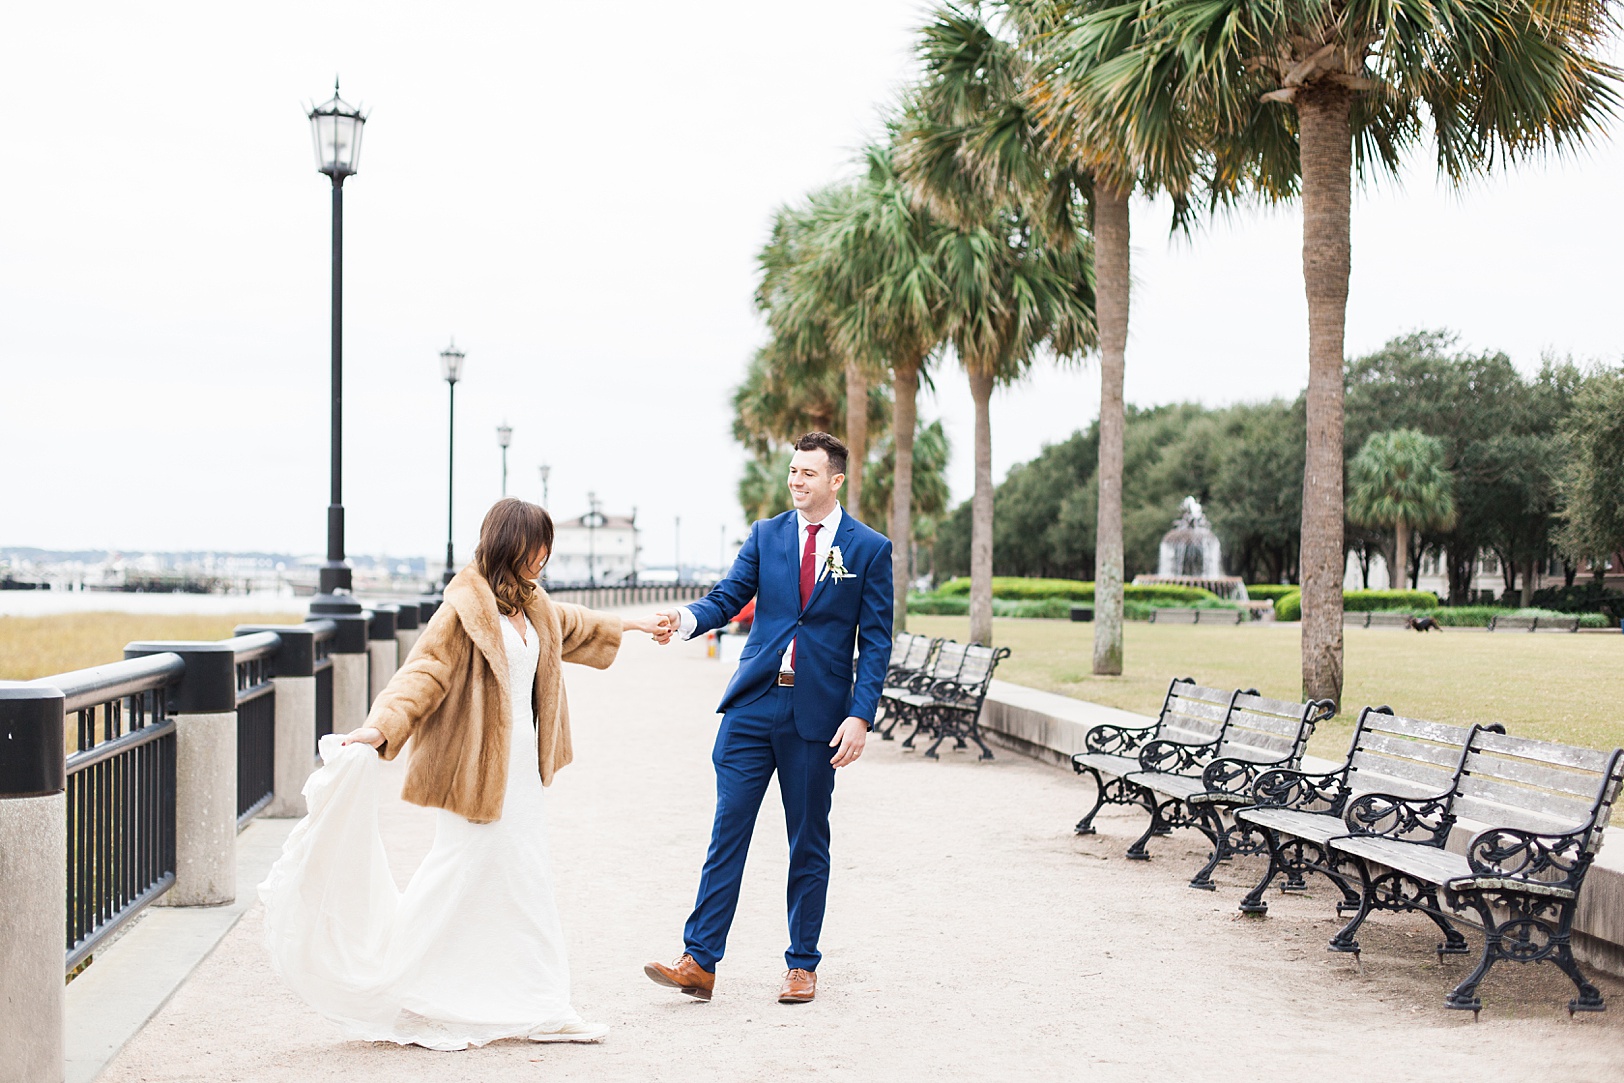 Waterfront Park Wedding Portraits in December | Kaitlin Scott Photography